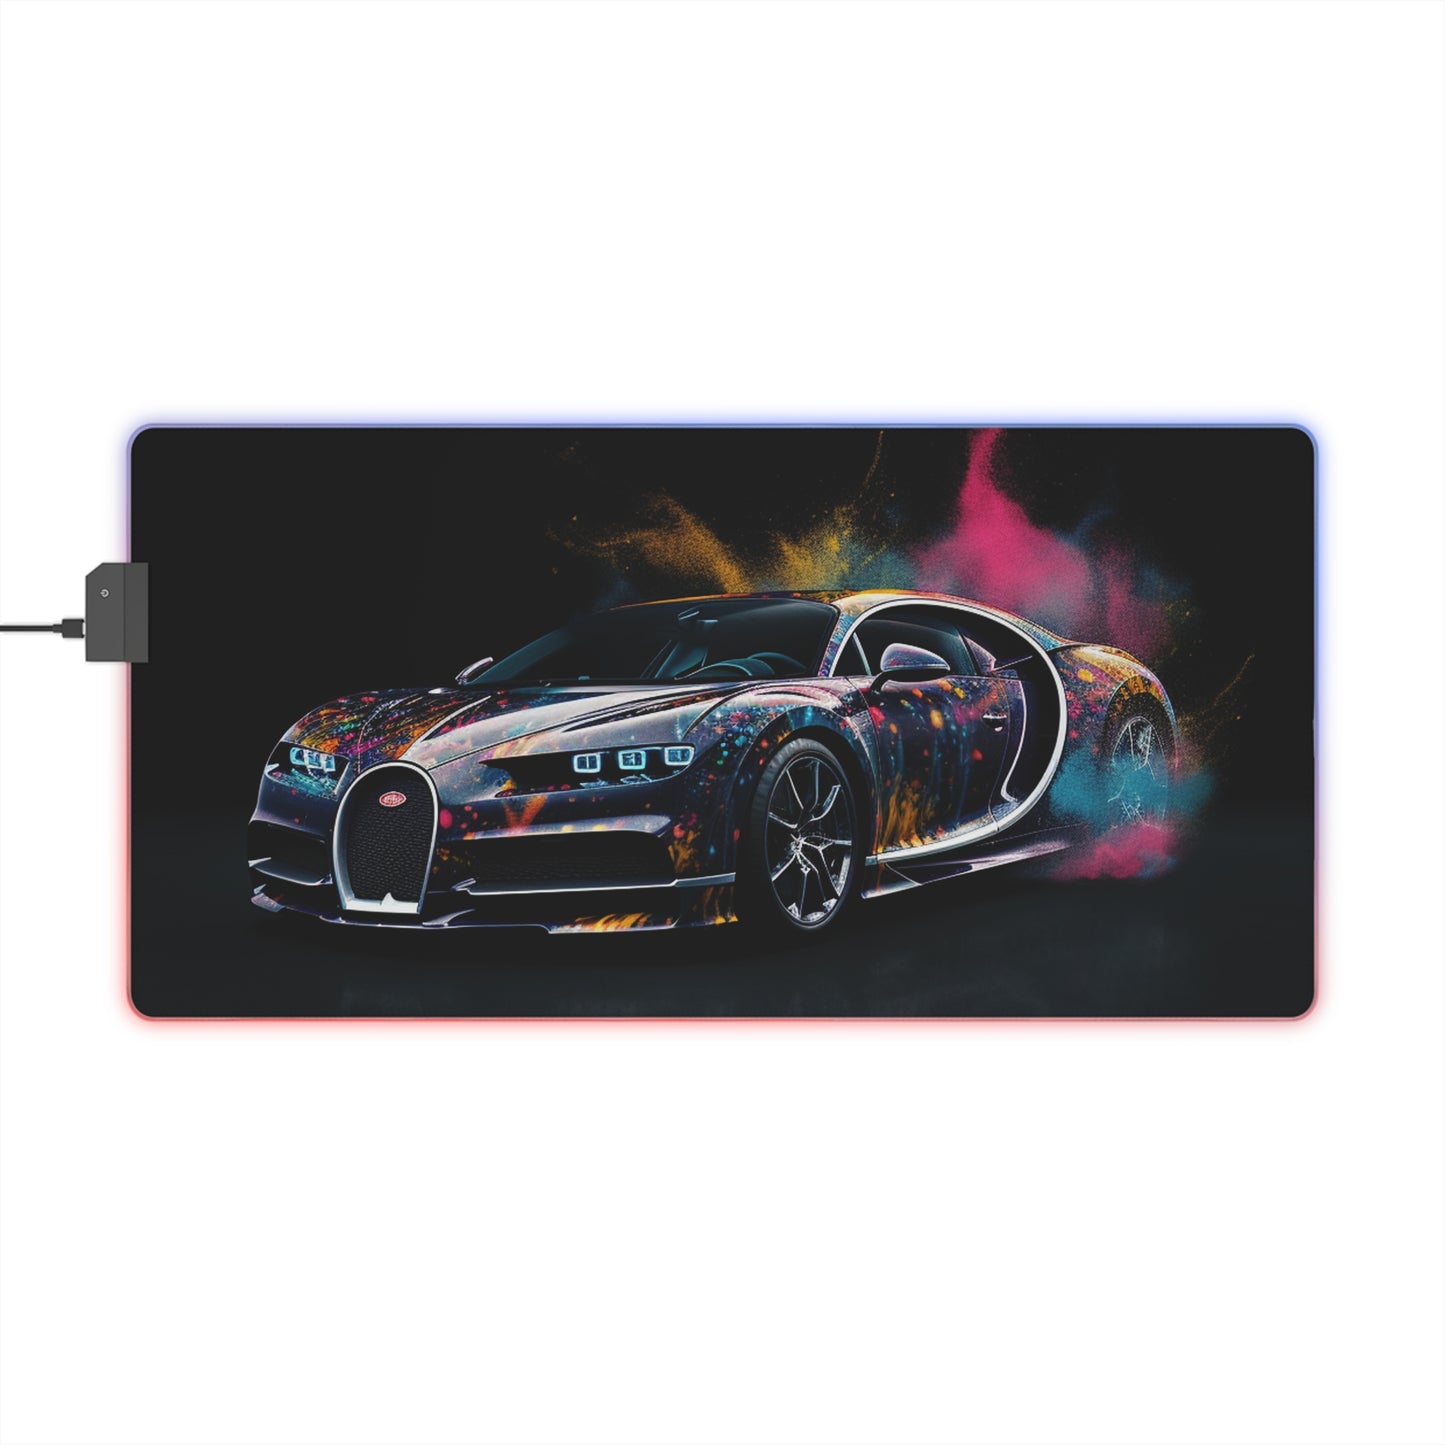 LED Gaming Mouse Pad Hyper Bugatti 4